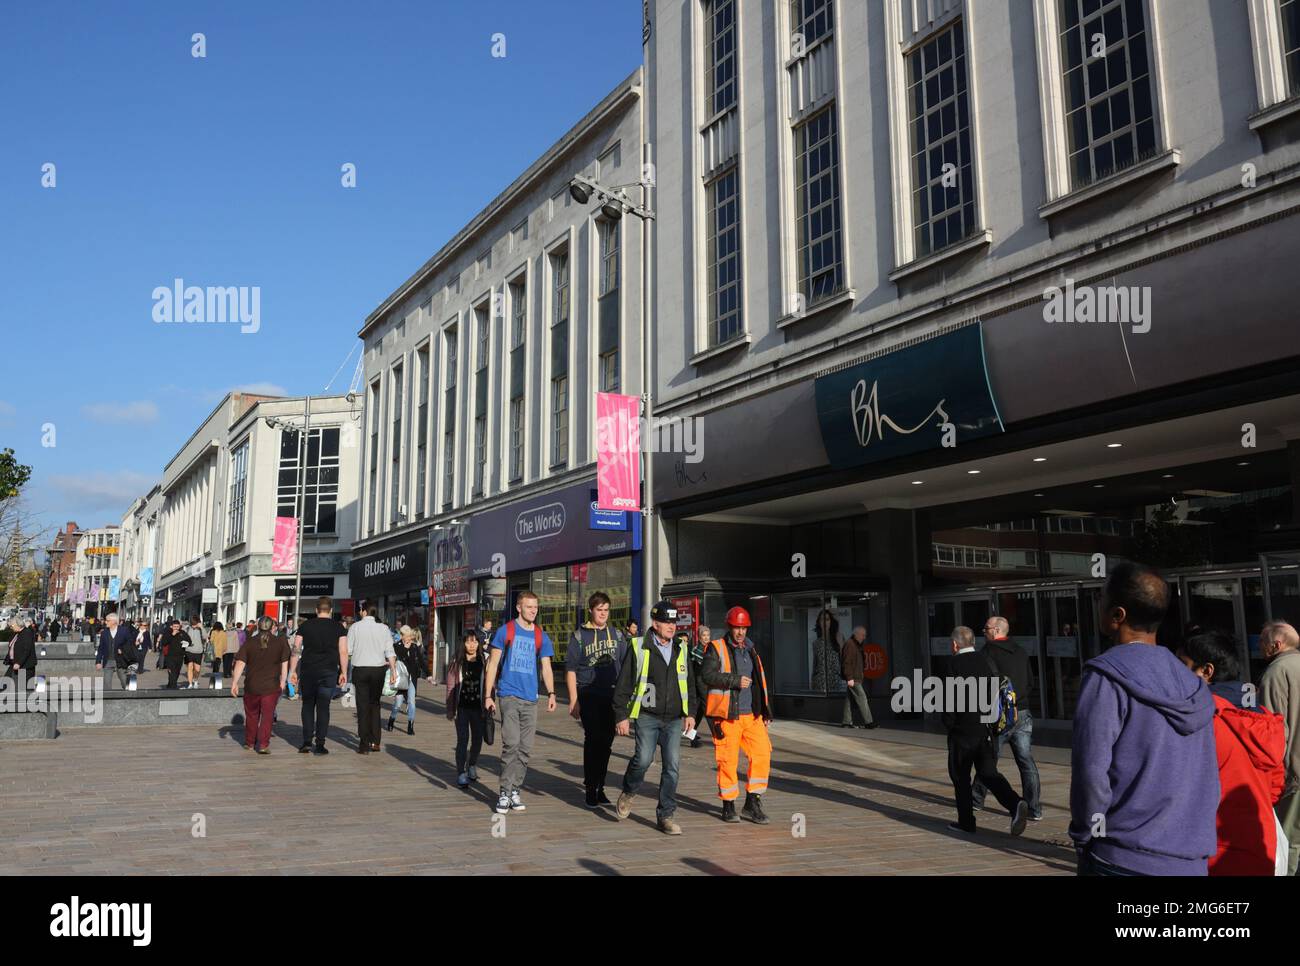 The Moor Shopping precinct, Sheffield city centre England UK, People shoppers walking pedestrians Stock Photo